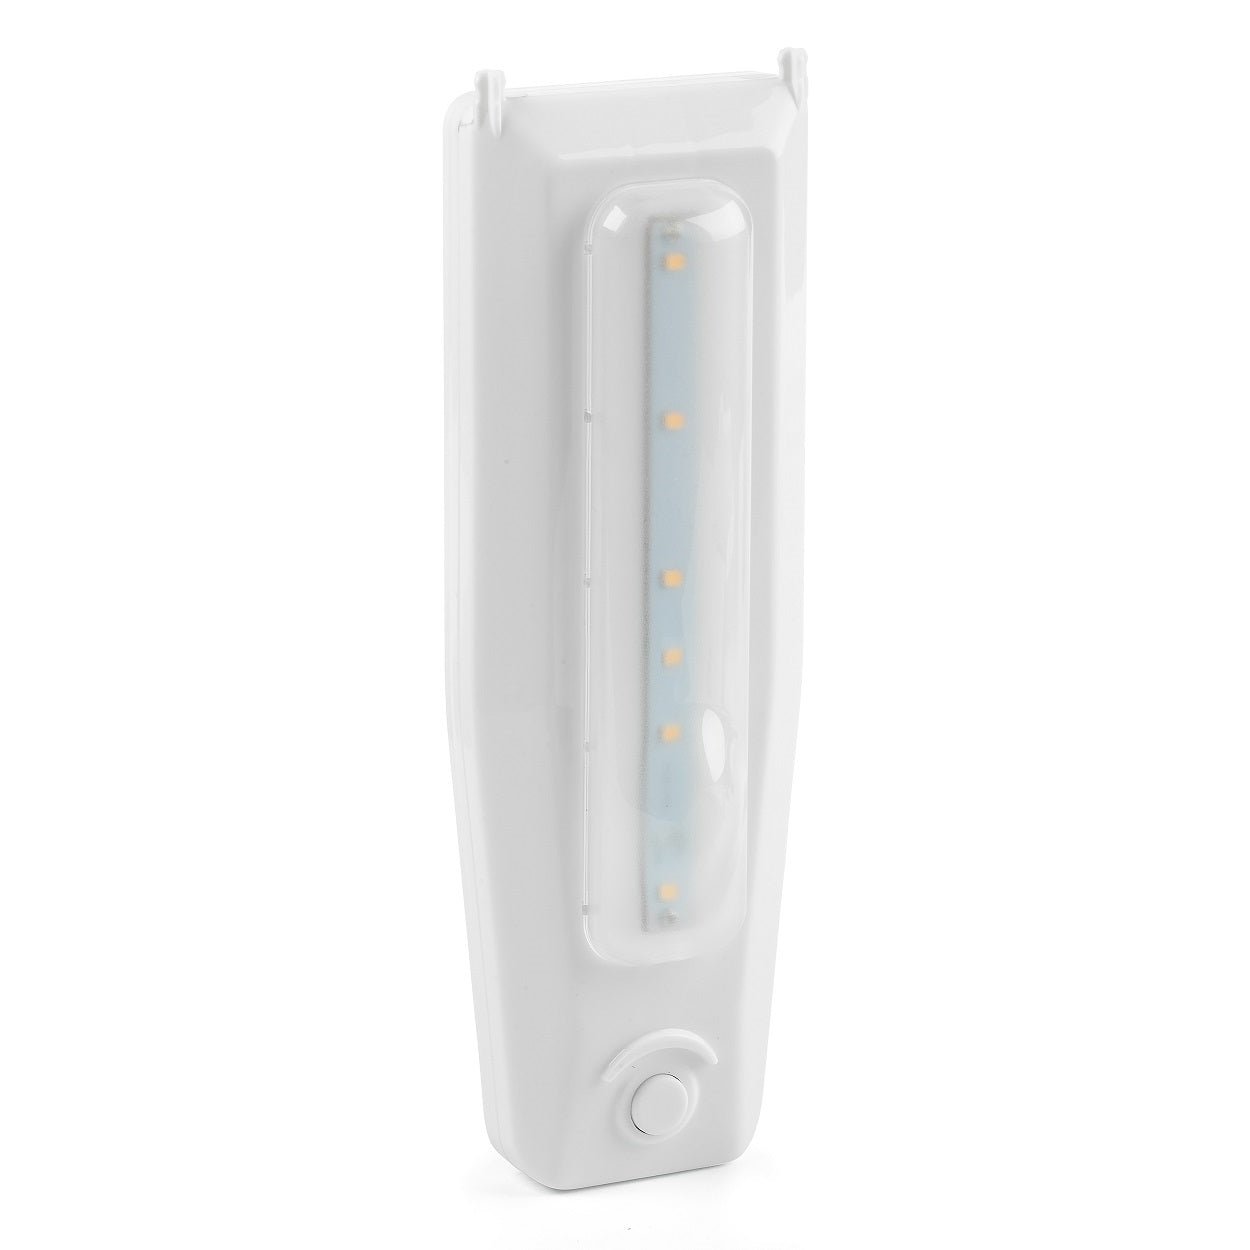 Vertical LED Backplate for Sconce Lights (White/Amber modes)